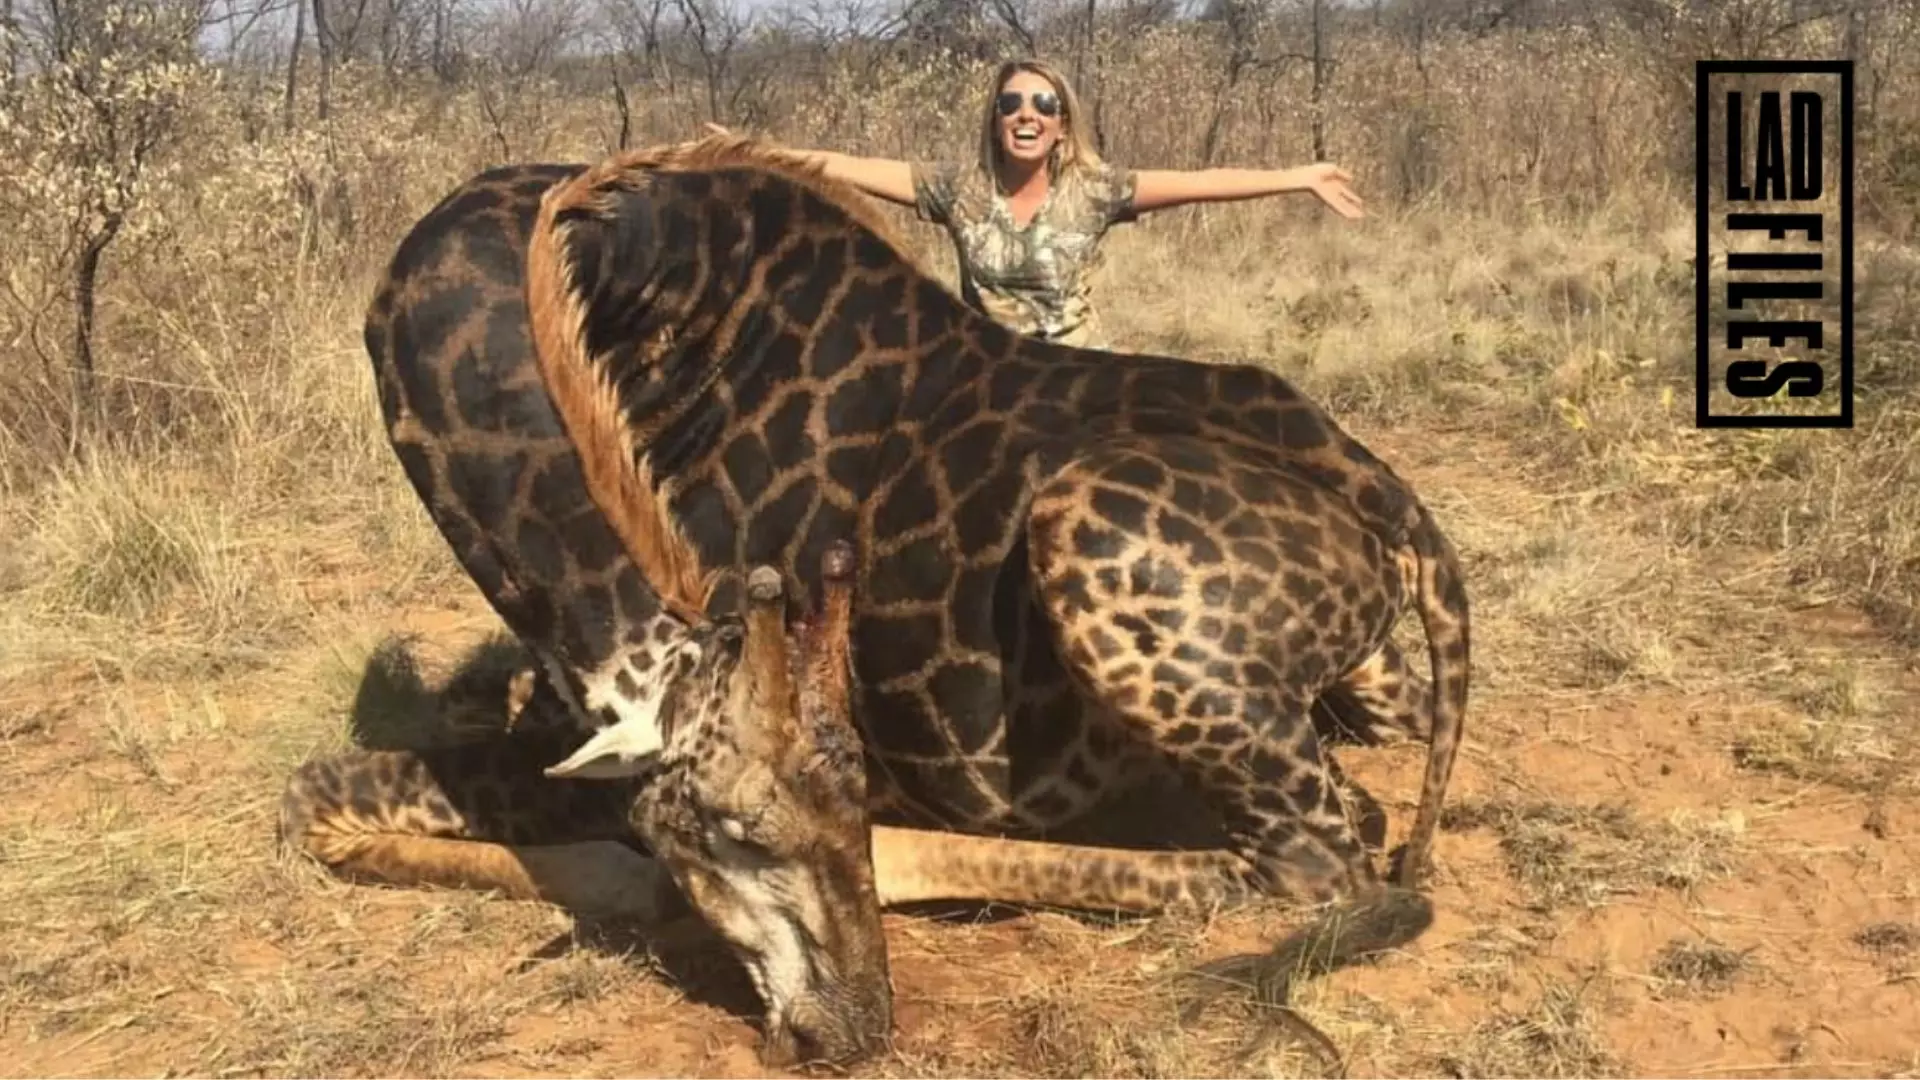 Female Trophy Hunter Explains Why She Will Never Regret Killing Wild Animals